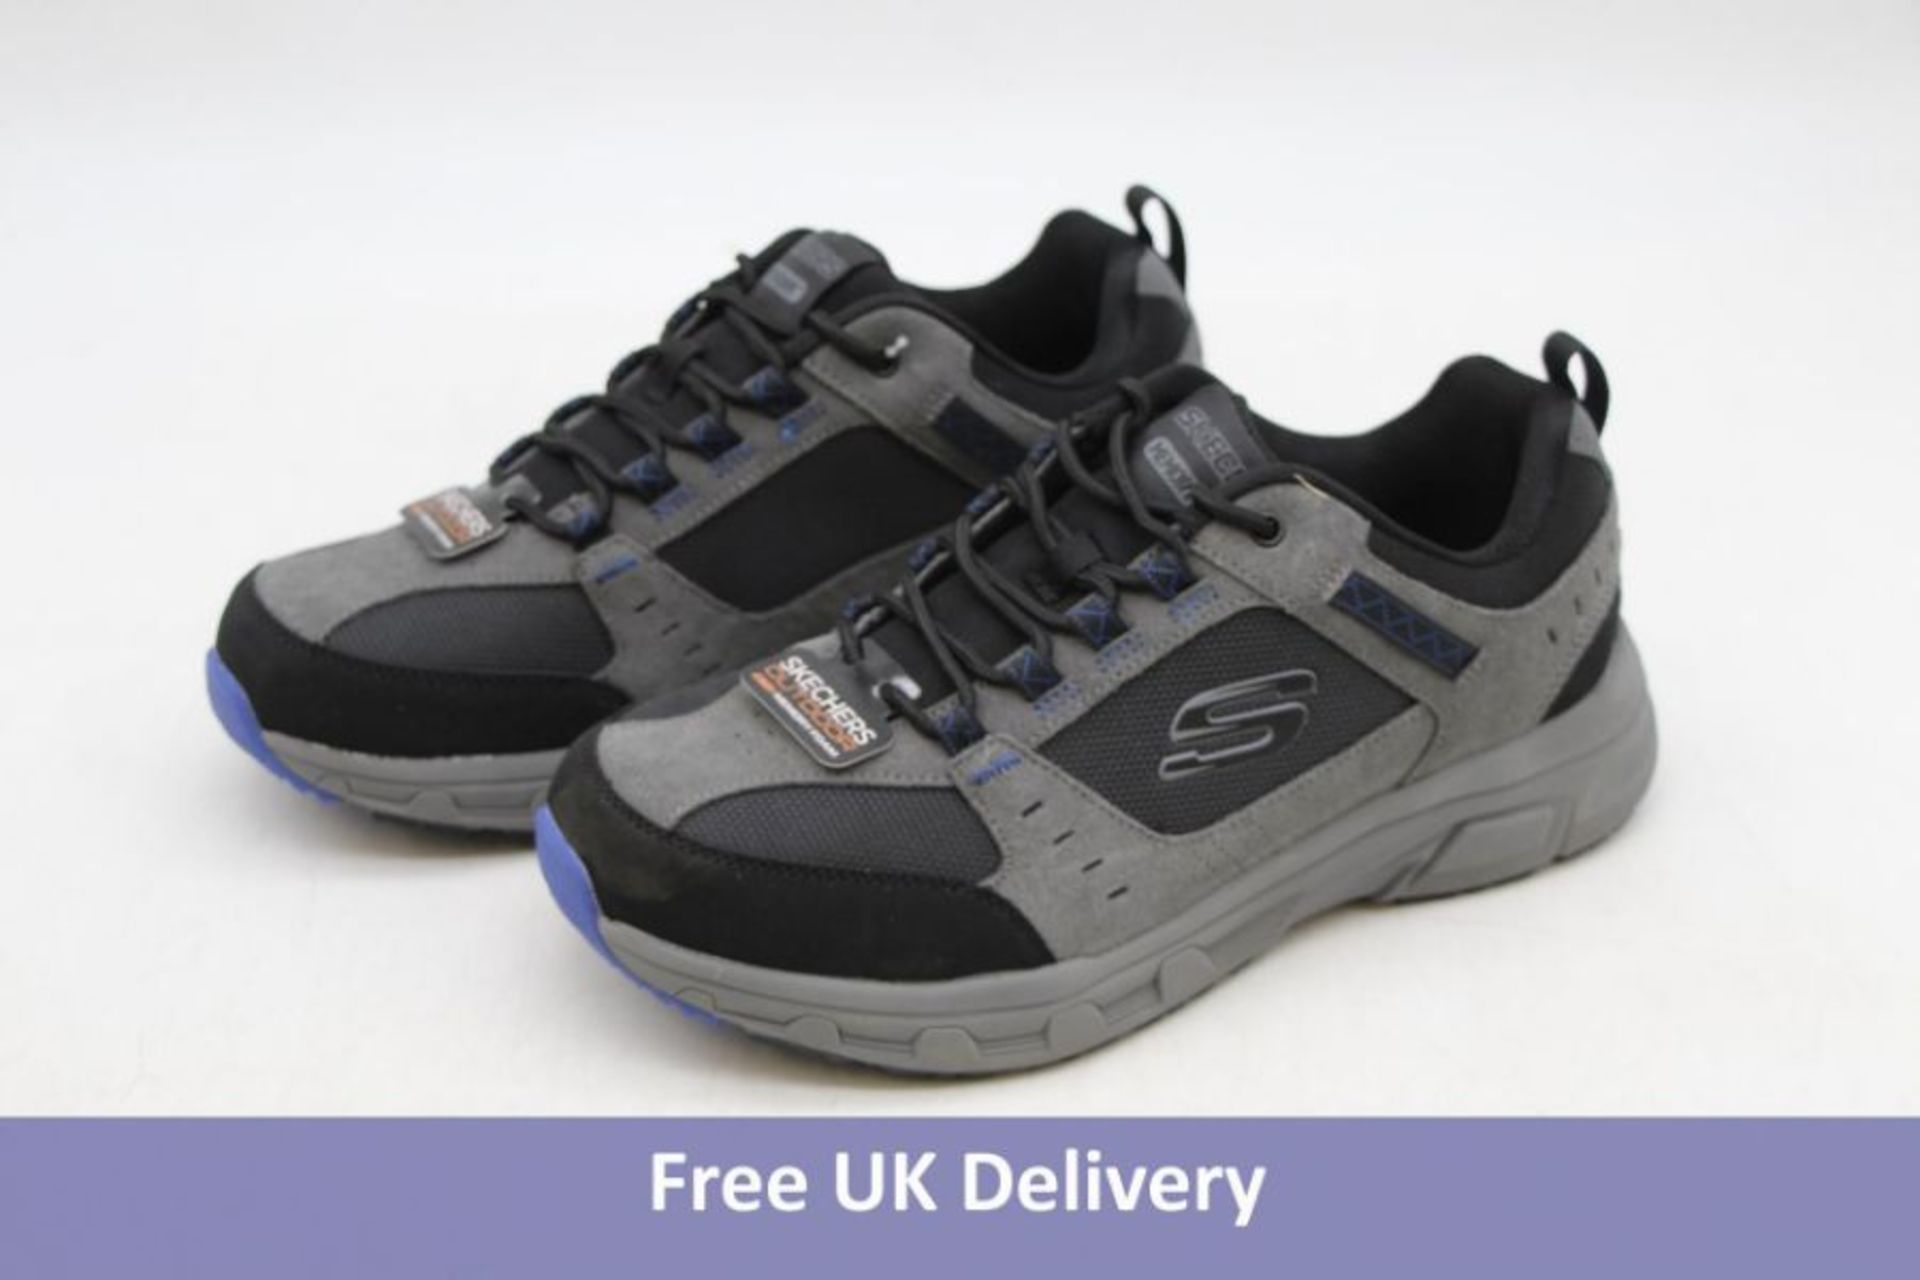 Skechers Men's Memory Foam Trekking Shoes, Grey/Black, UK 9, No Box